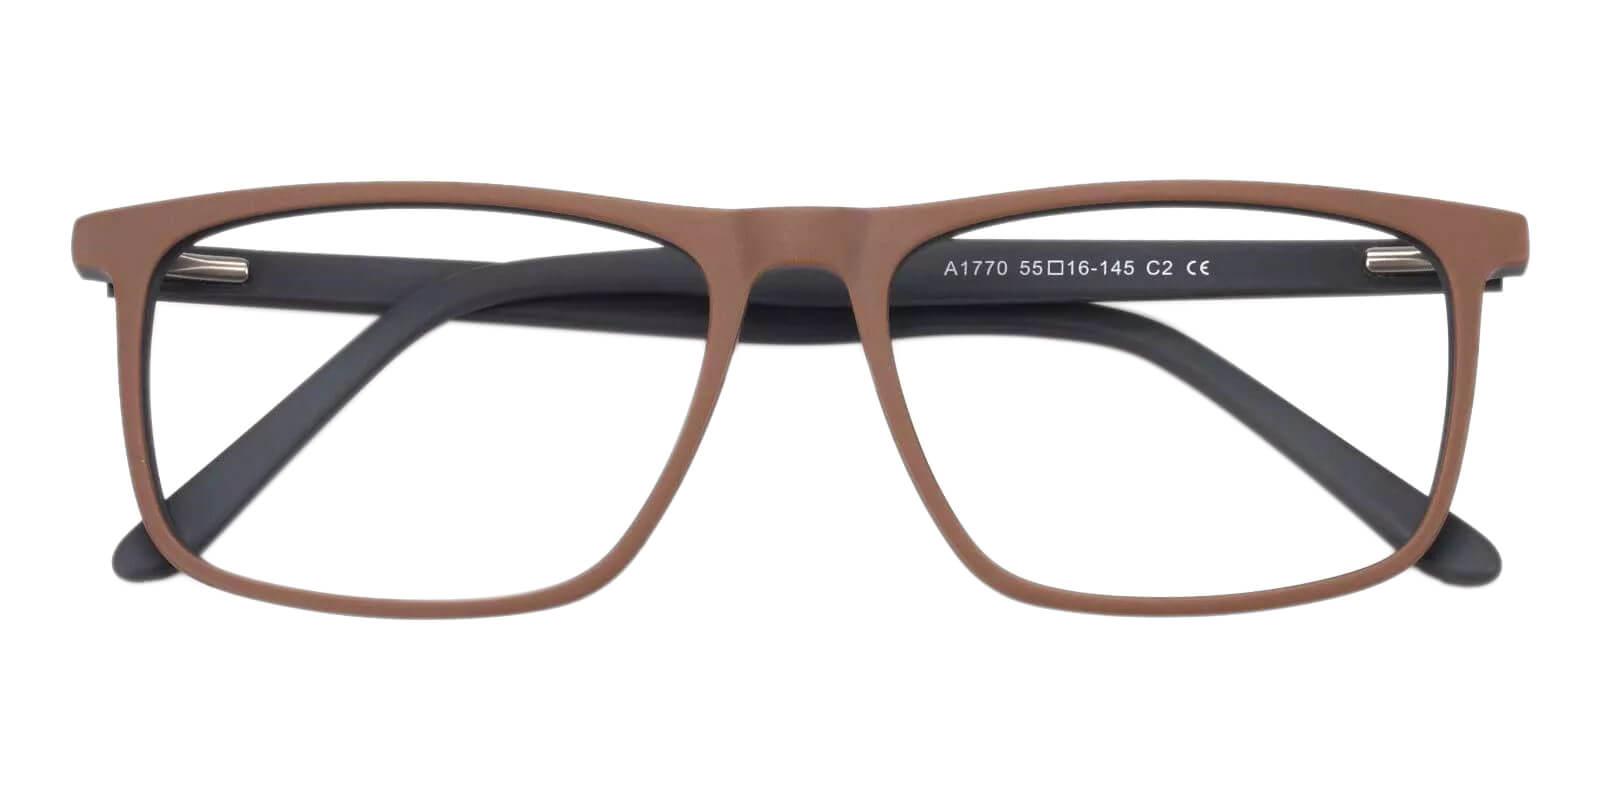 Doris Brown Acetate Eyeglasses , Fashion , SpringHinges , UniversalBridgeFit Frames from ABBE Glasses